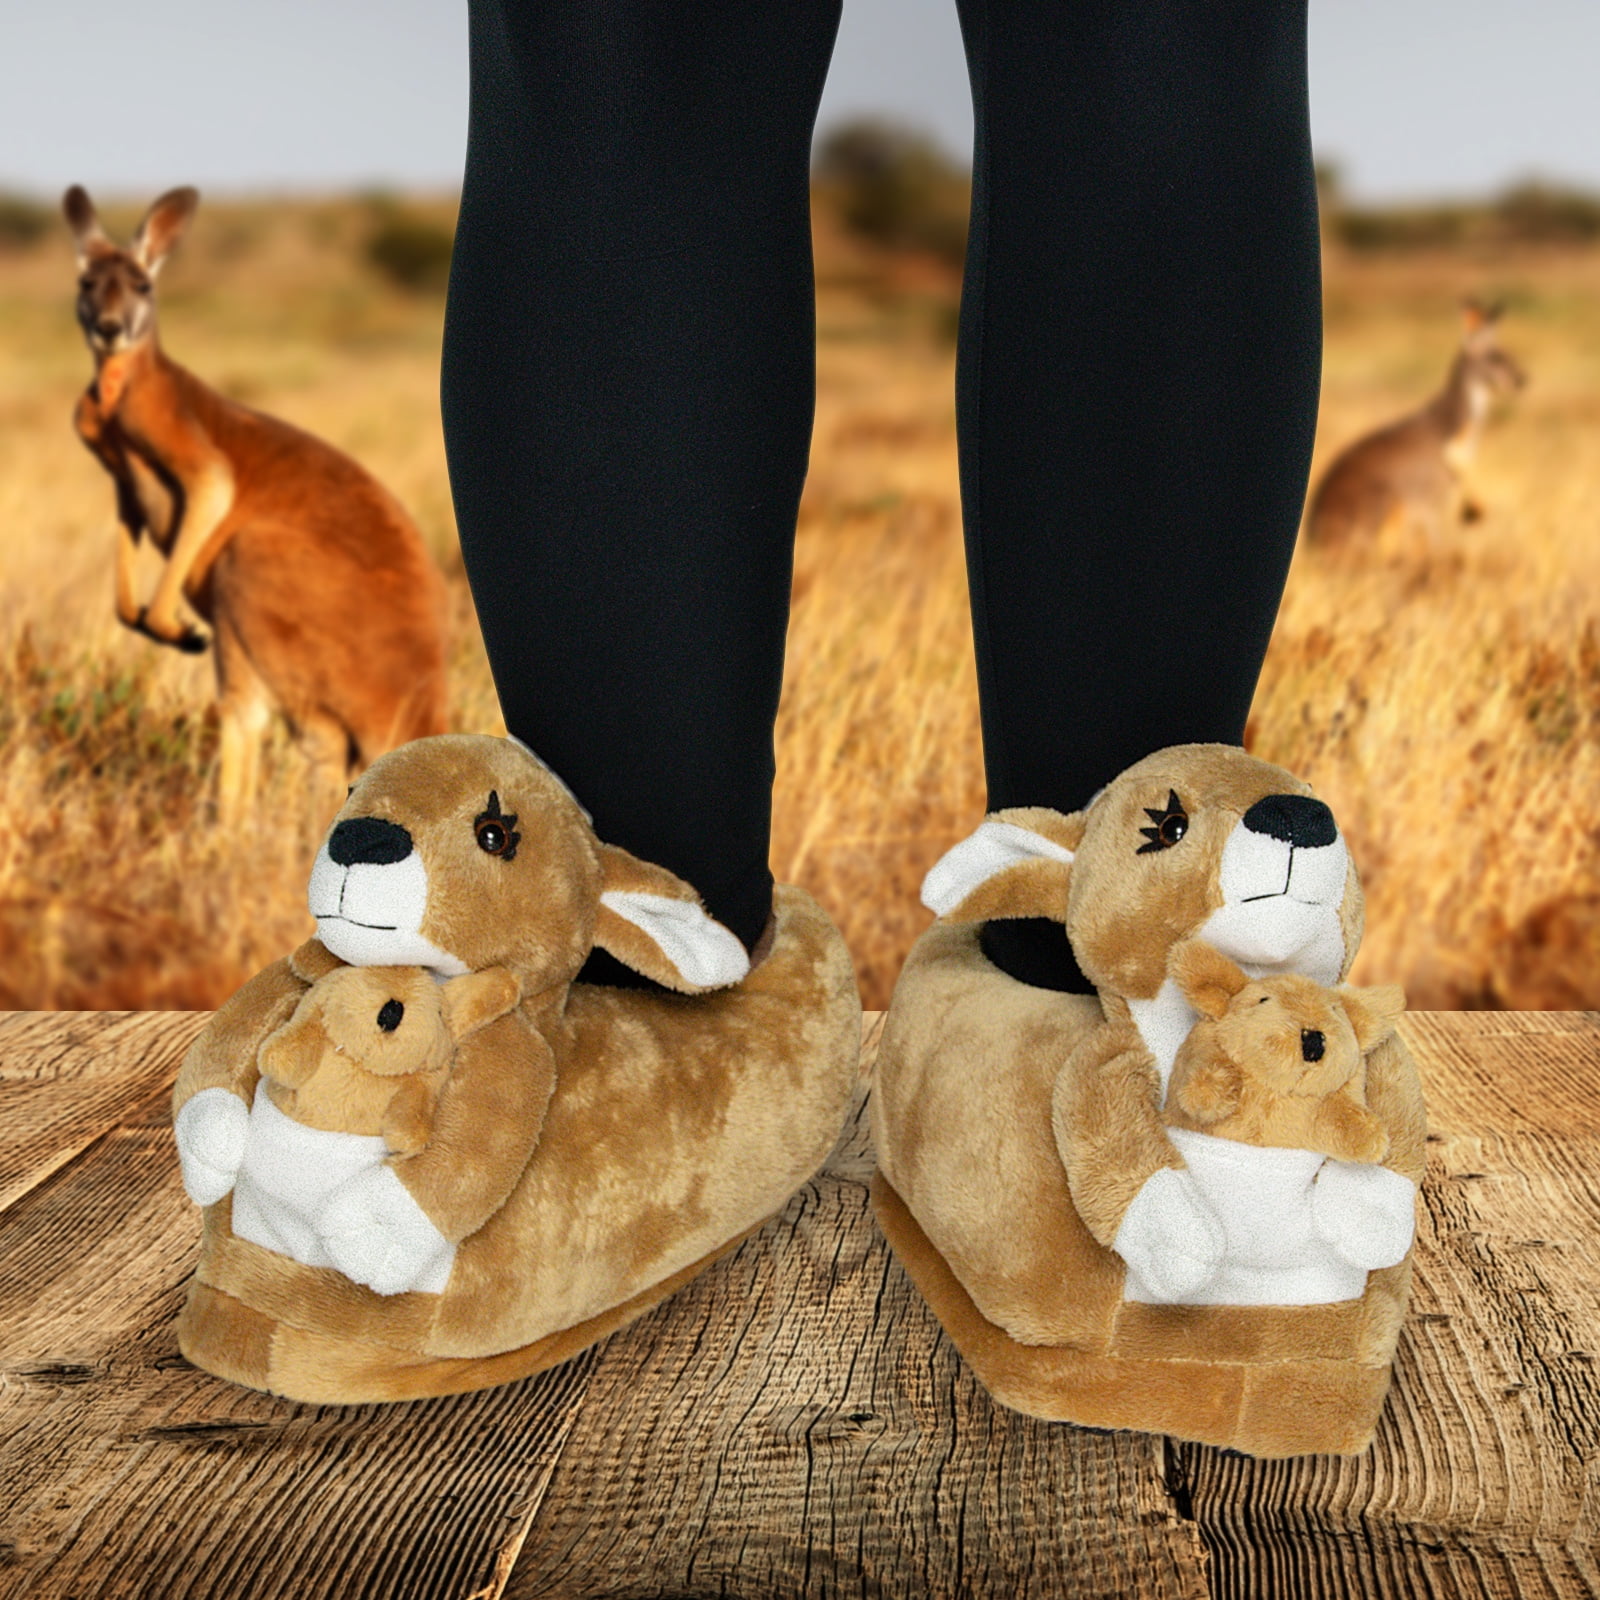 seksuel Ovenstående kam FUNZIEZ! - Kangaroo Fuzzy Slippers - Animal Slippers Novelty House Shoe  (Brown, Large) - Walmart.com